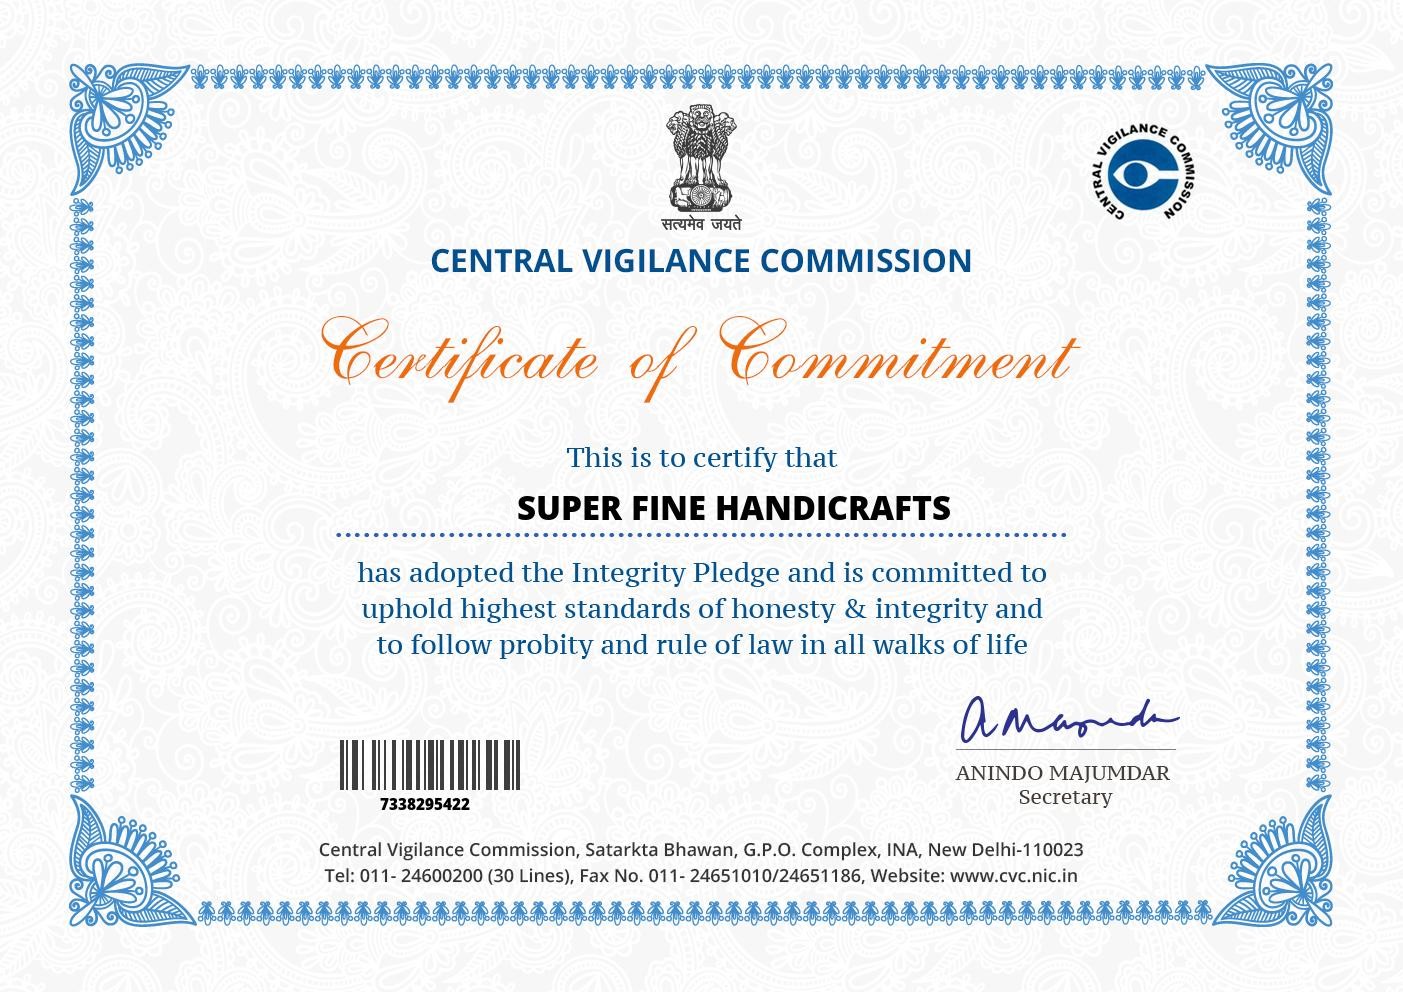 SUPERFINE HANDICRAFTS -CENTRAL VIGILENCE COMMISSION CERTIFICATE